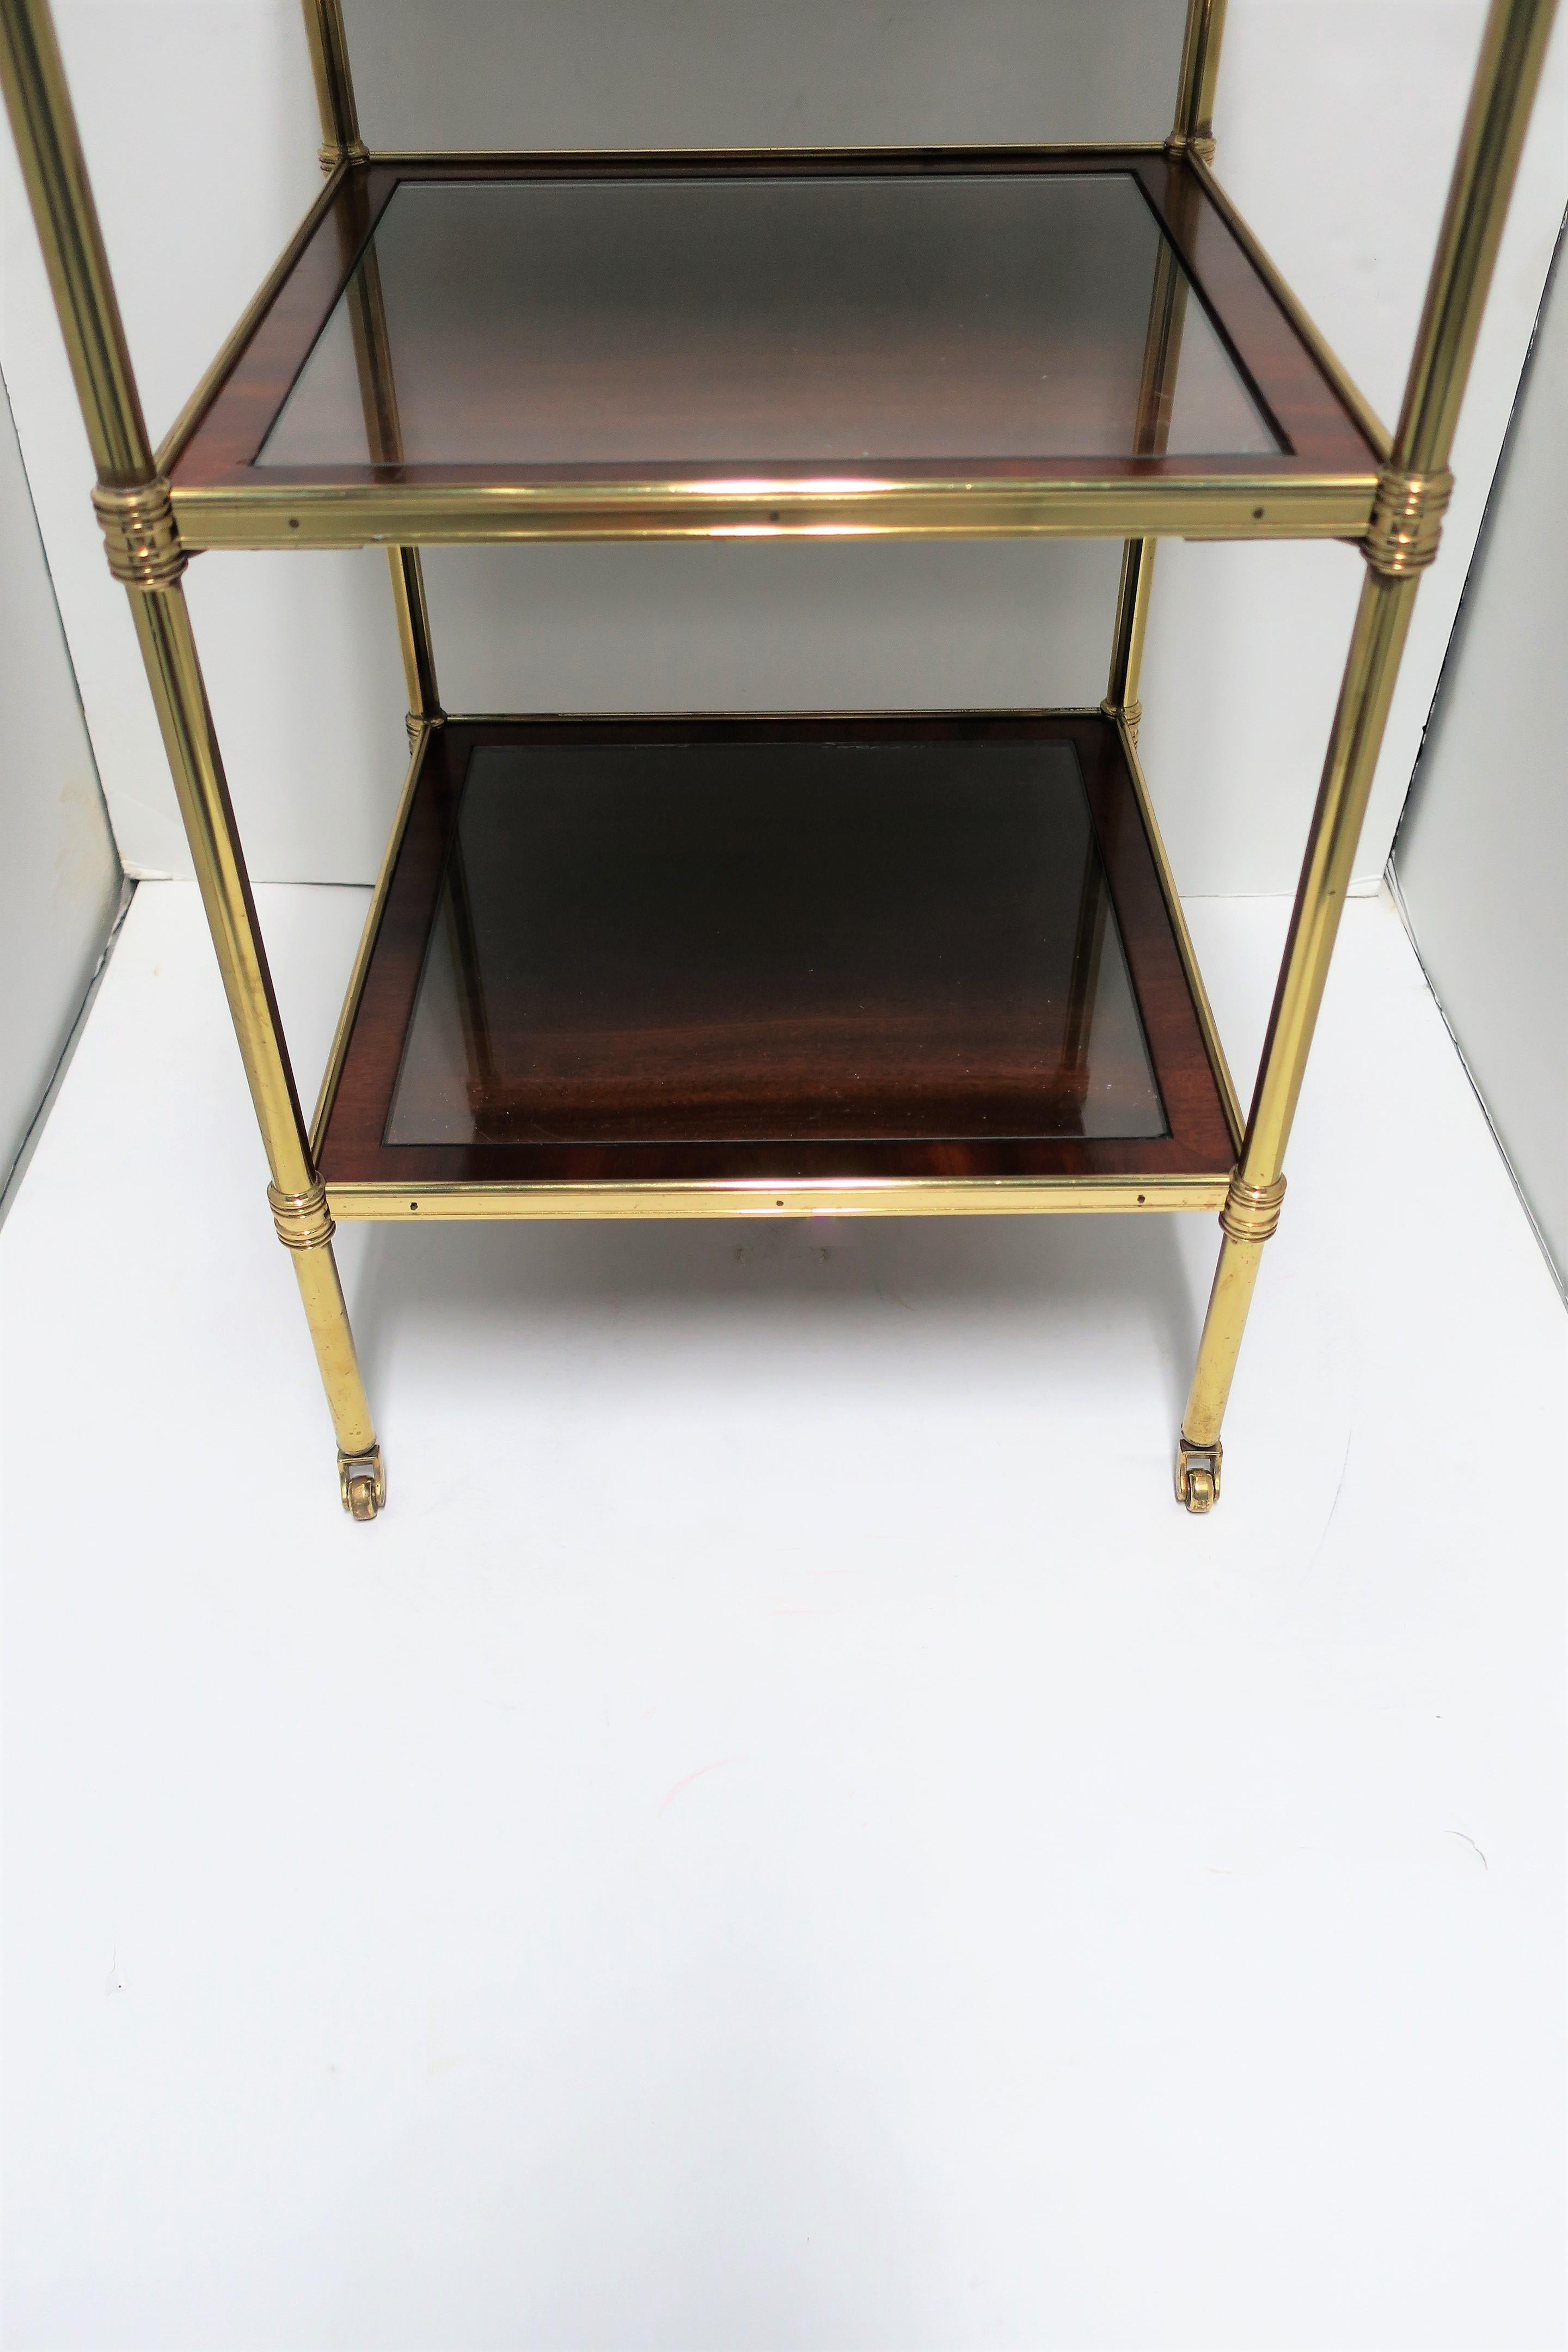 Designer English Regency Brass Glass Mahogany Table Shelves by William Tillman 11